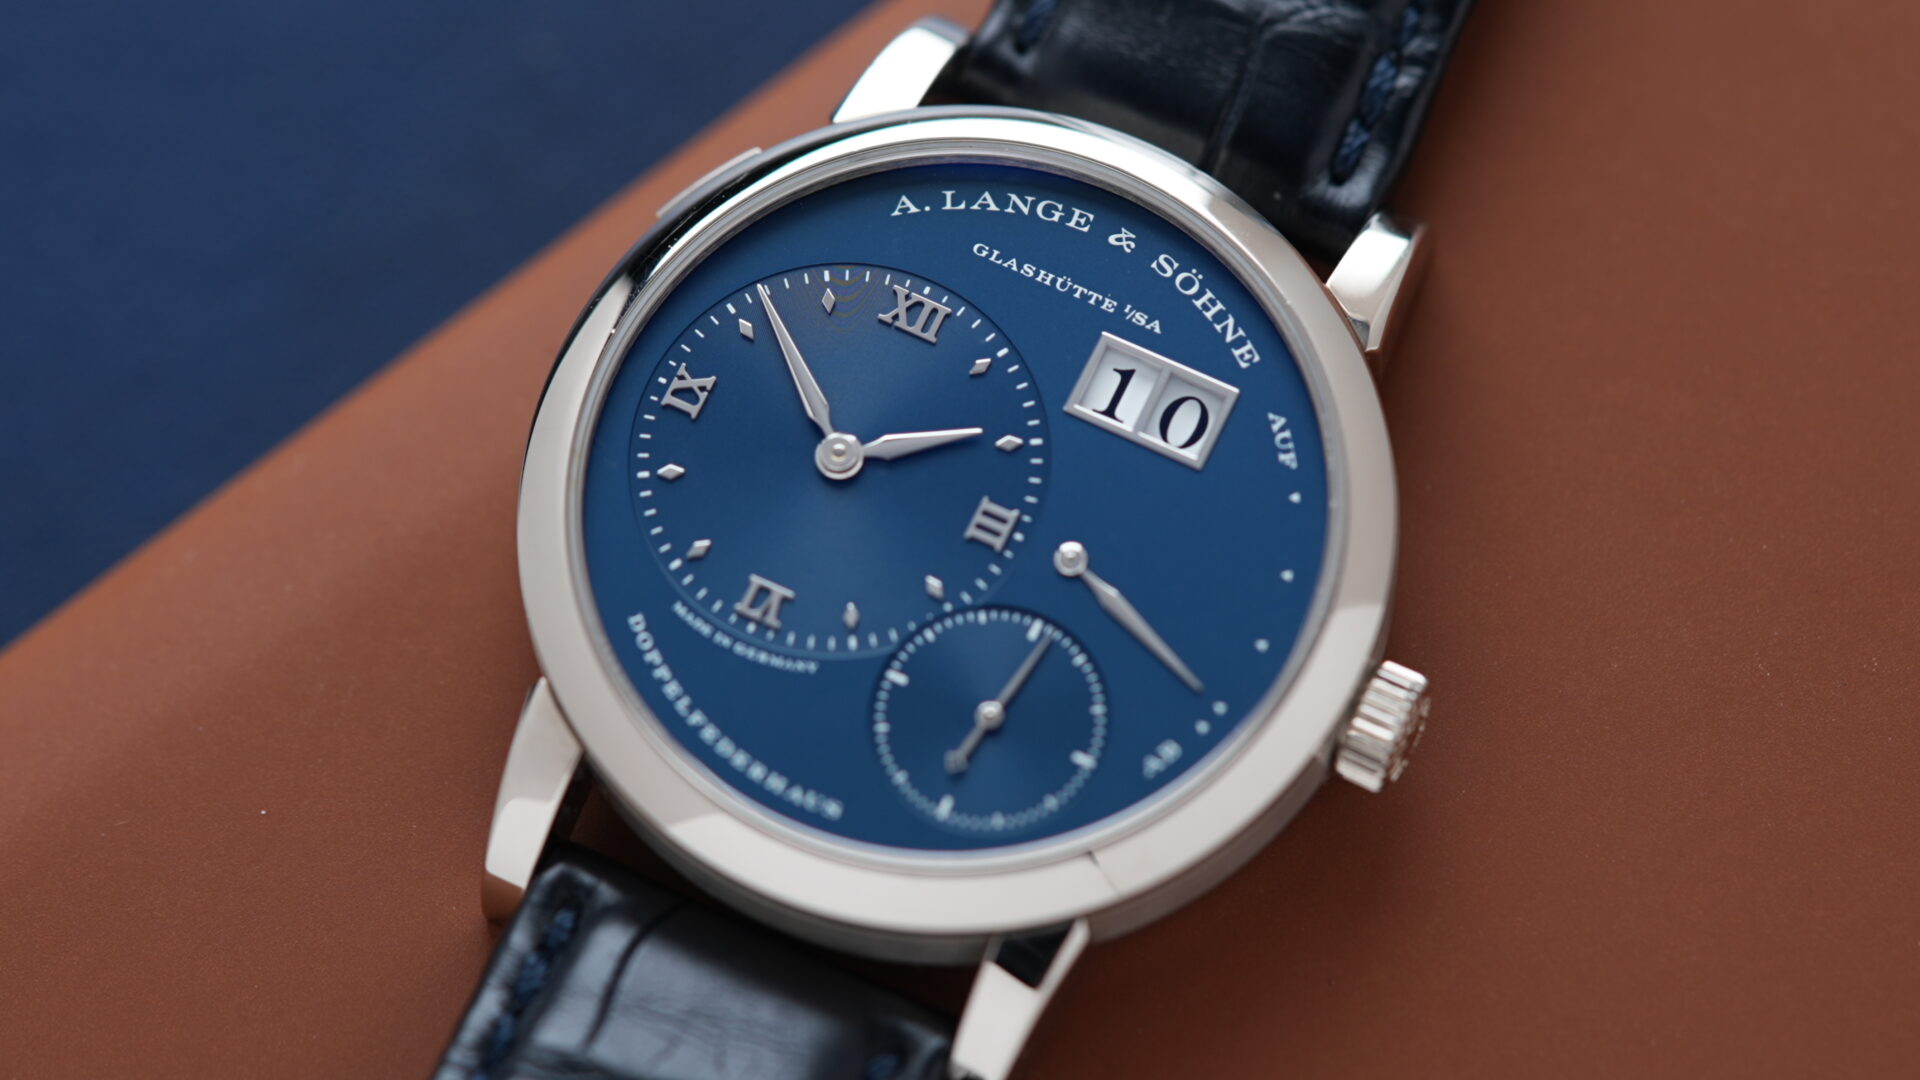 A. Lange & Söhne Lange 1 'Blue Series' 191.028 White Gold watch angled shot.